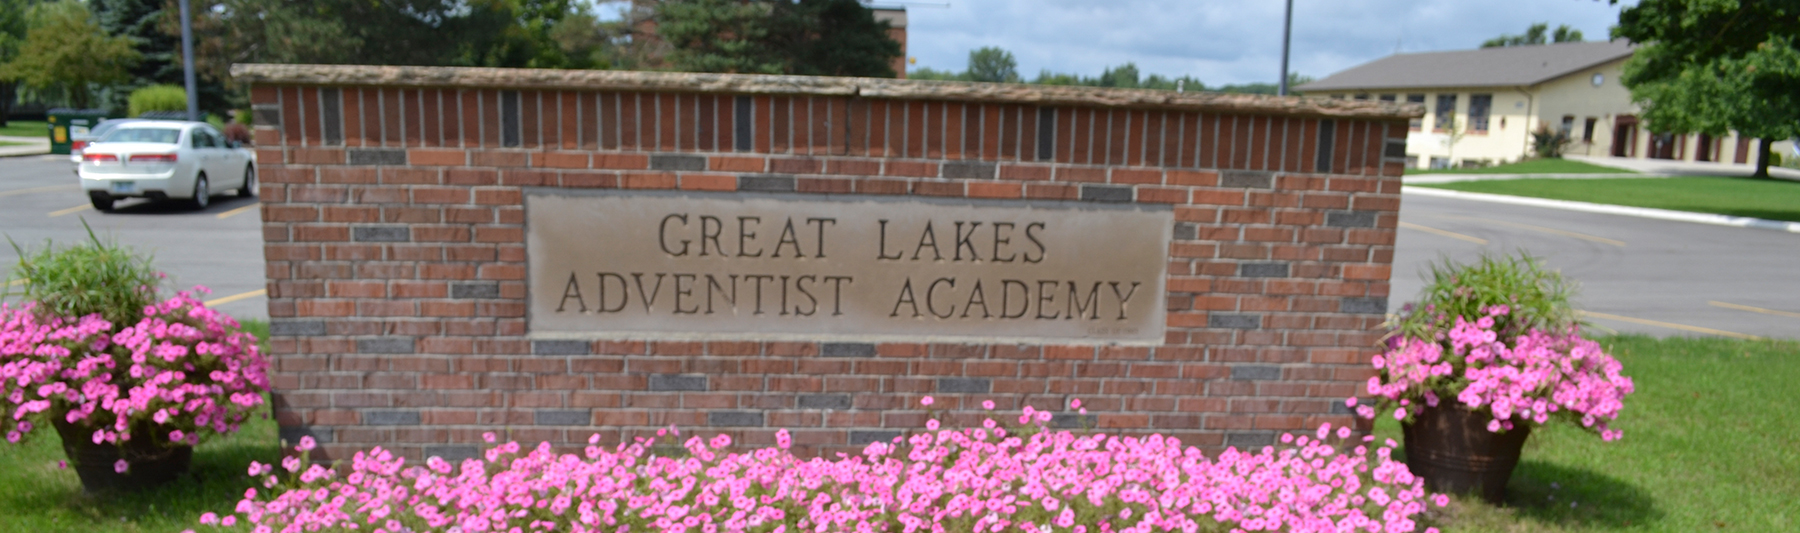 Michigan - Great Lakes Adventist Academy Southern Adventist University